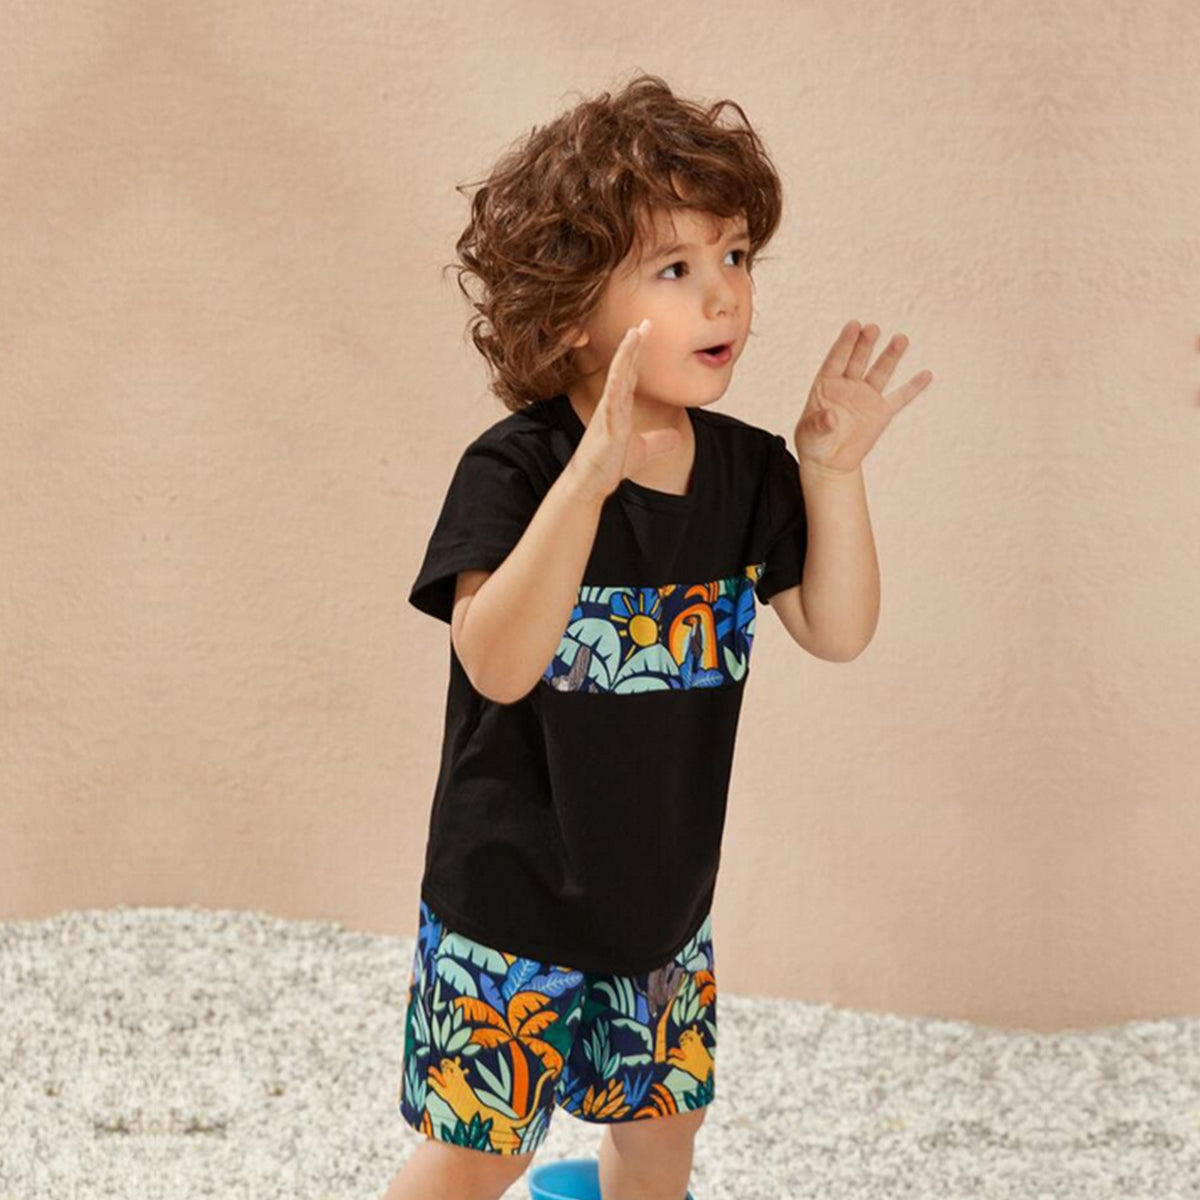 Venutaloza Stylish Baby Set Shirt & Short And (Combo Pack Of 3) T-Shirt & Shorts.